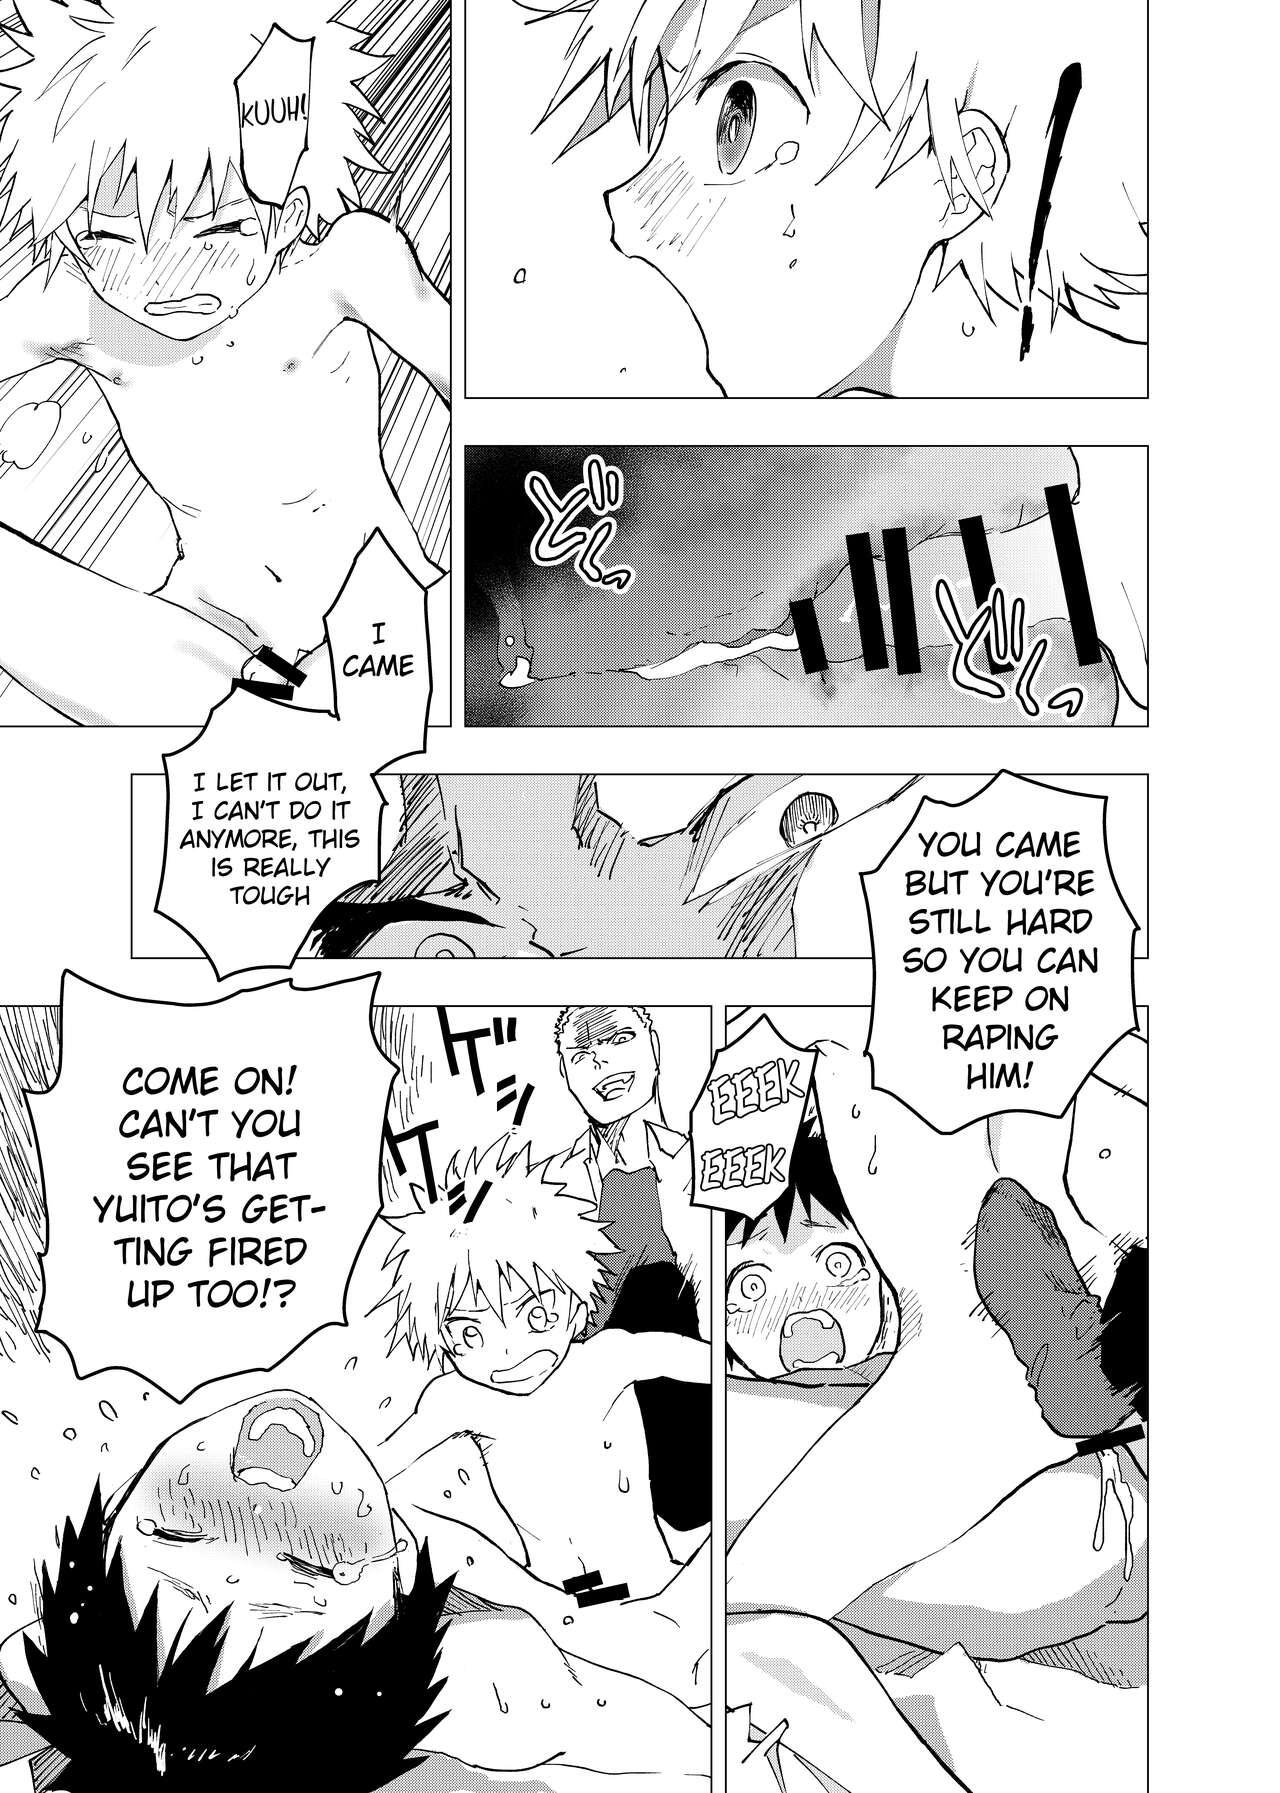 Ibasho ga Nai node Kamimachi shite mita Suterareta Shounen no Ero Manga Ch. 7 | A Dirty Manga About a Boy Who Got Abandoned and Is Waiting for Someone To Save Him Ch. 7 8